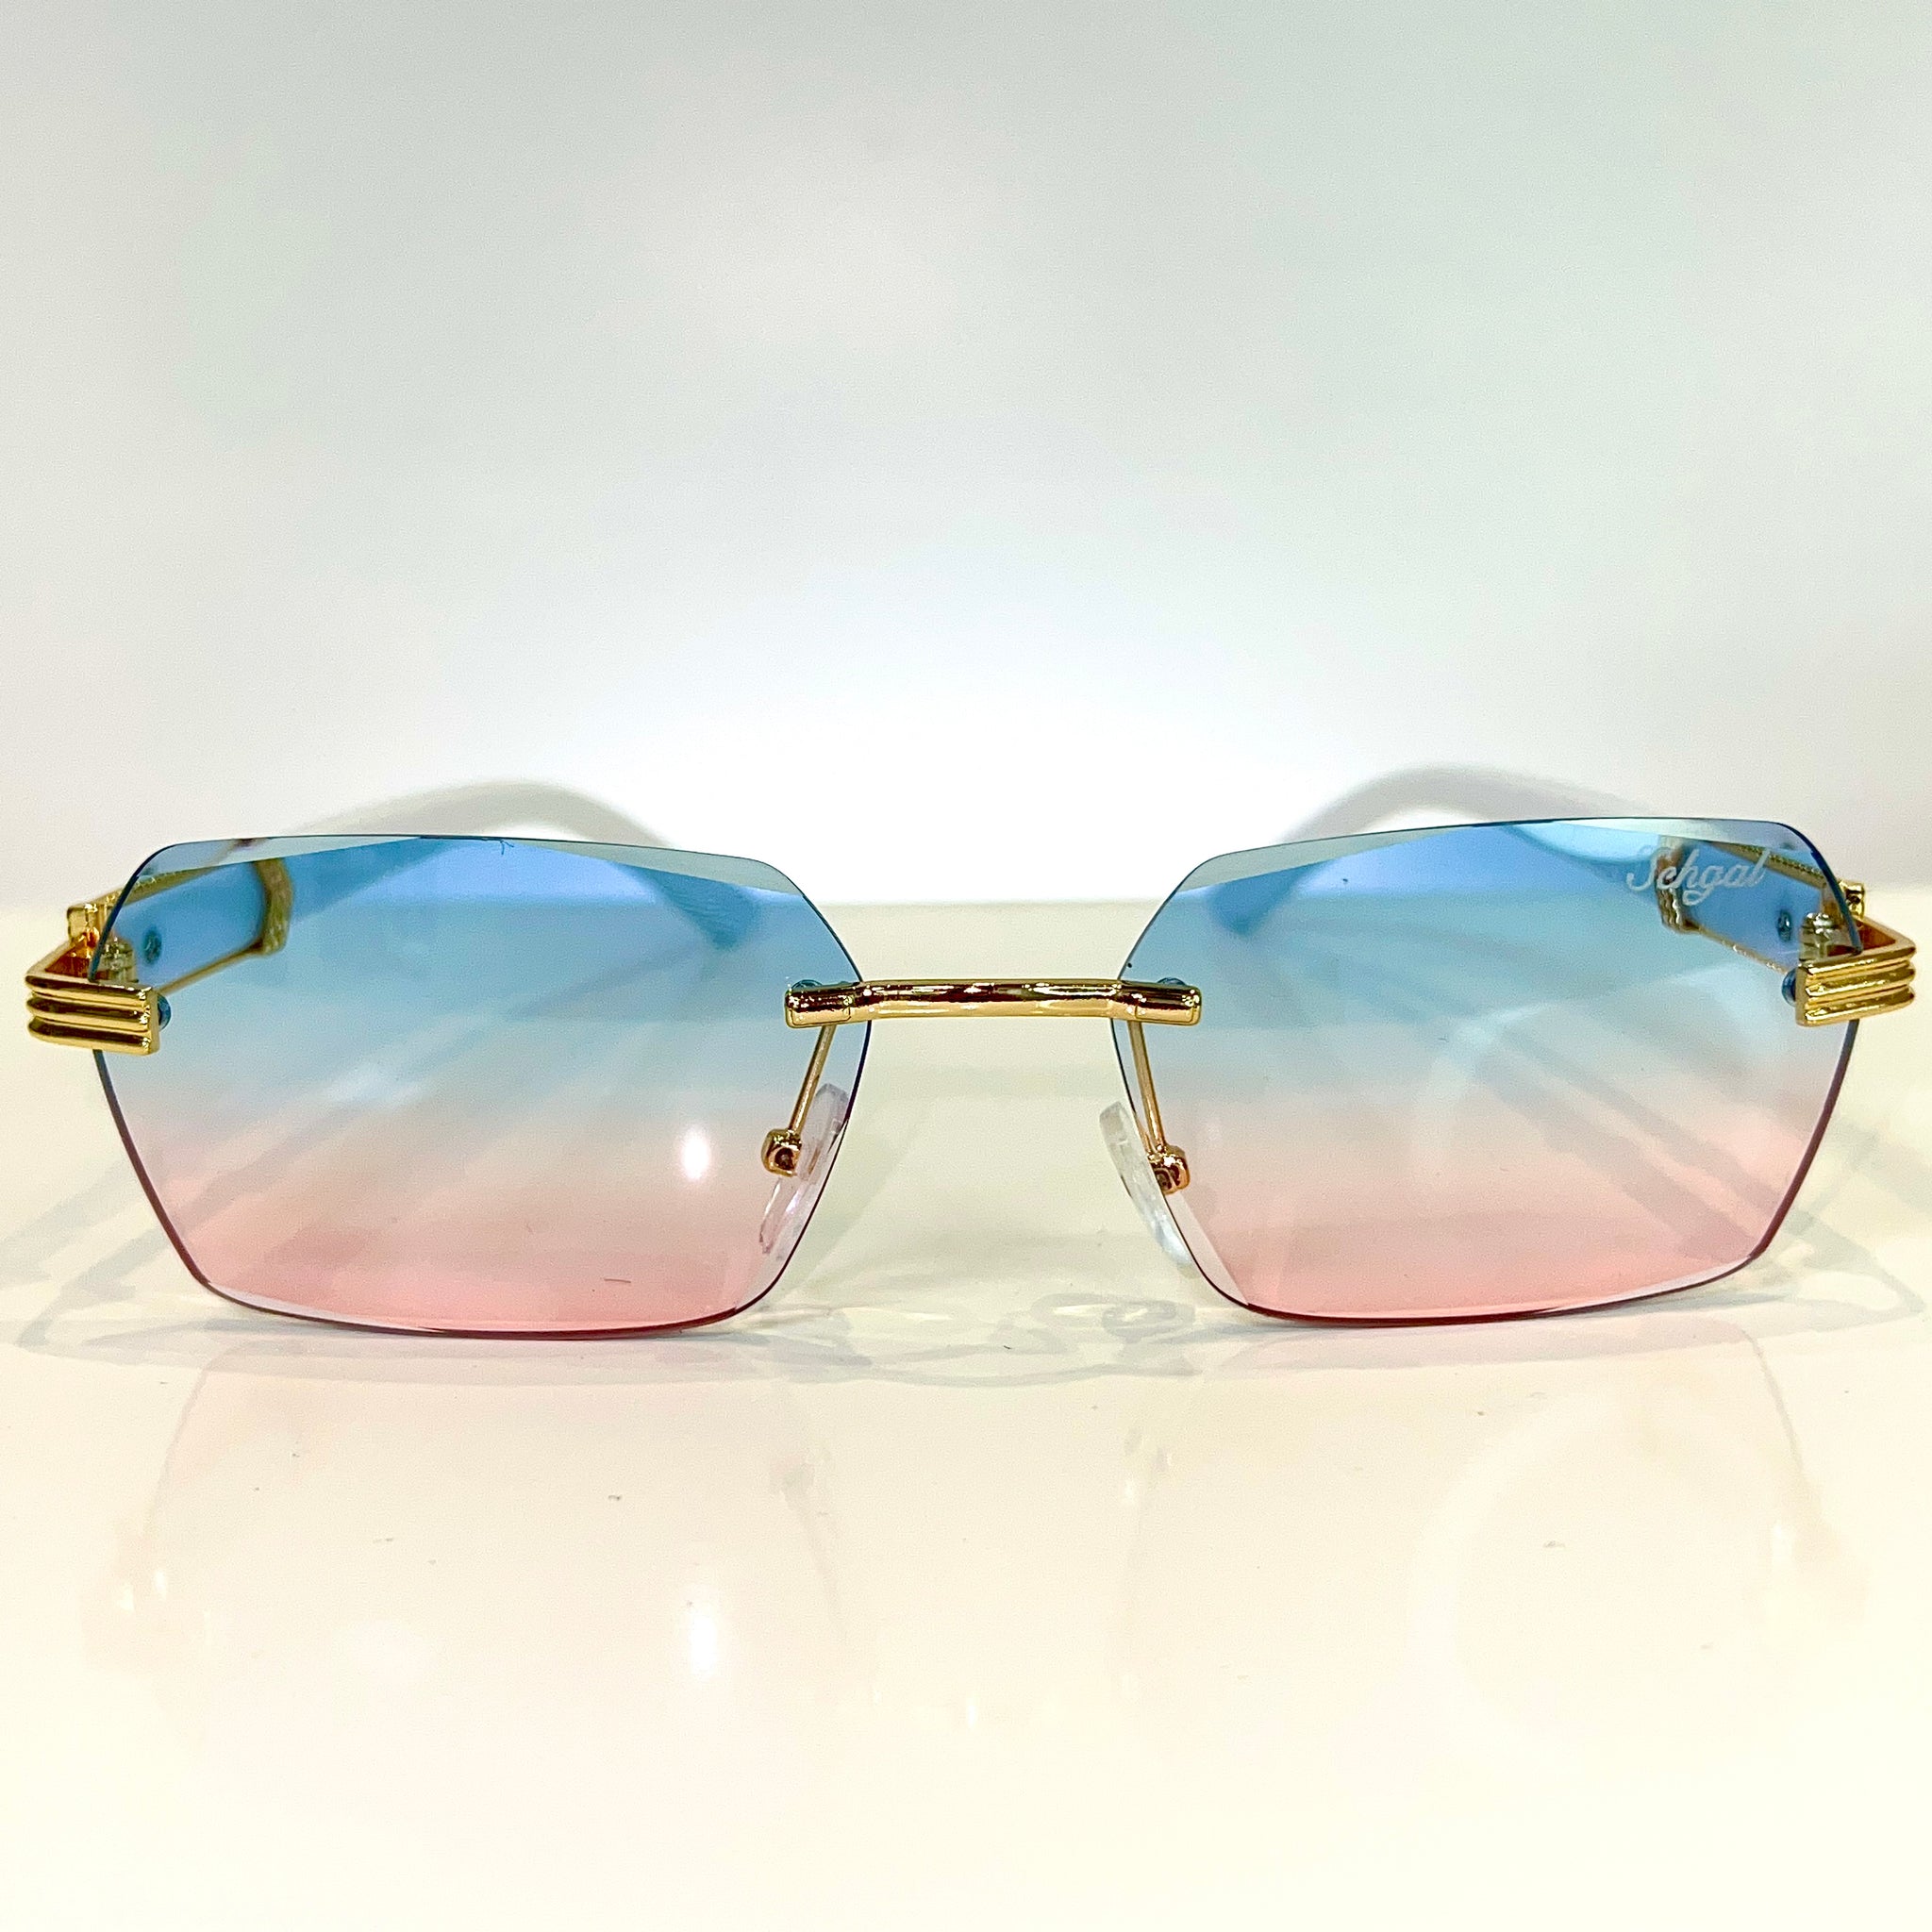 Marblecut Glasses - Pink: Blue Shade